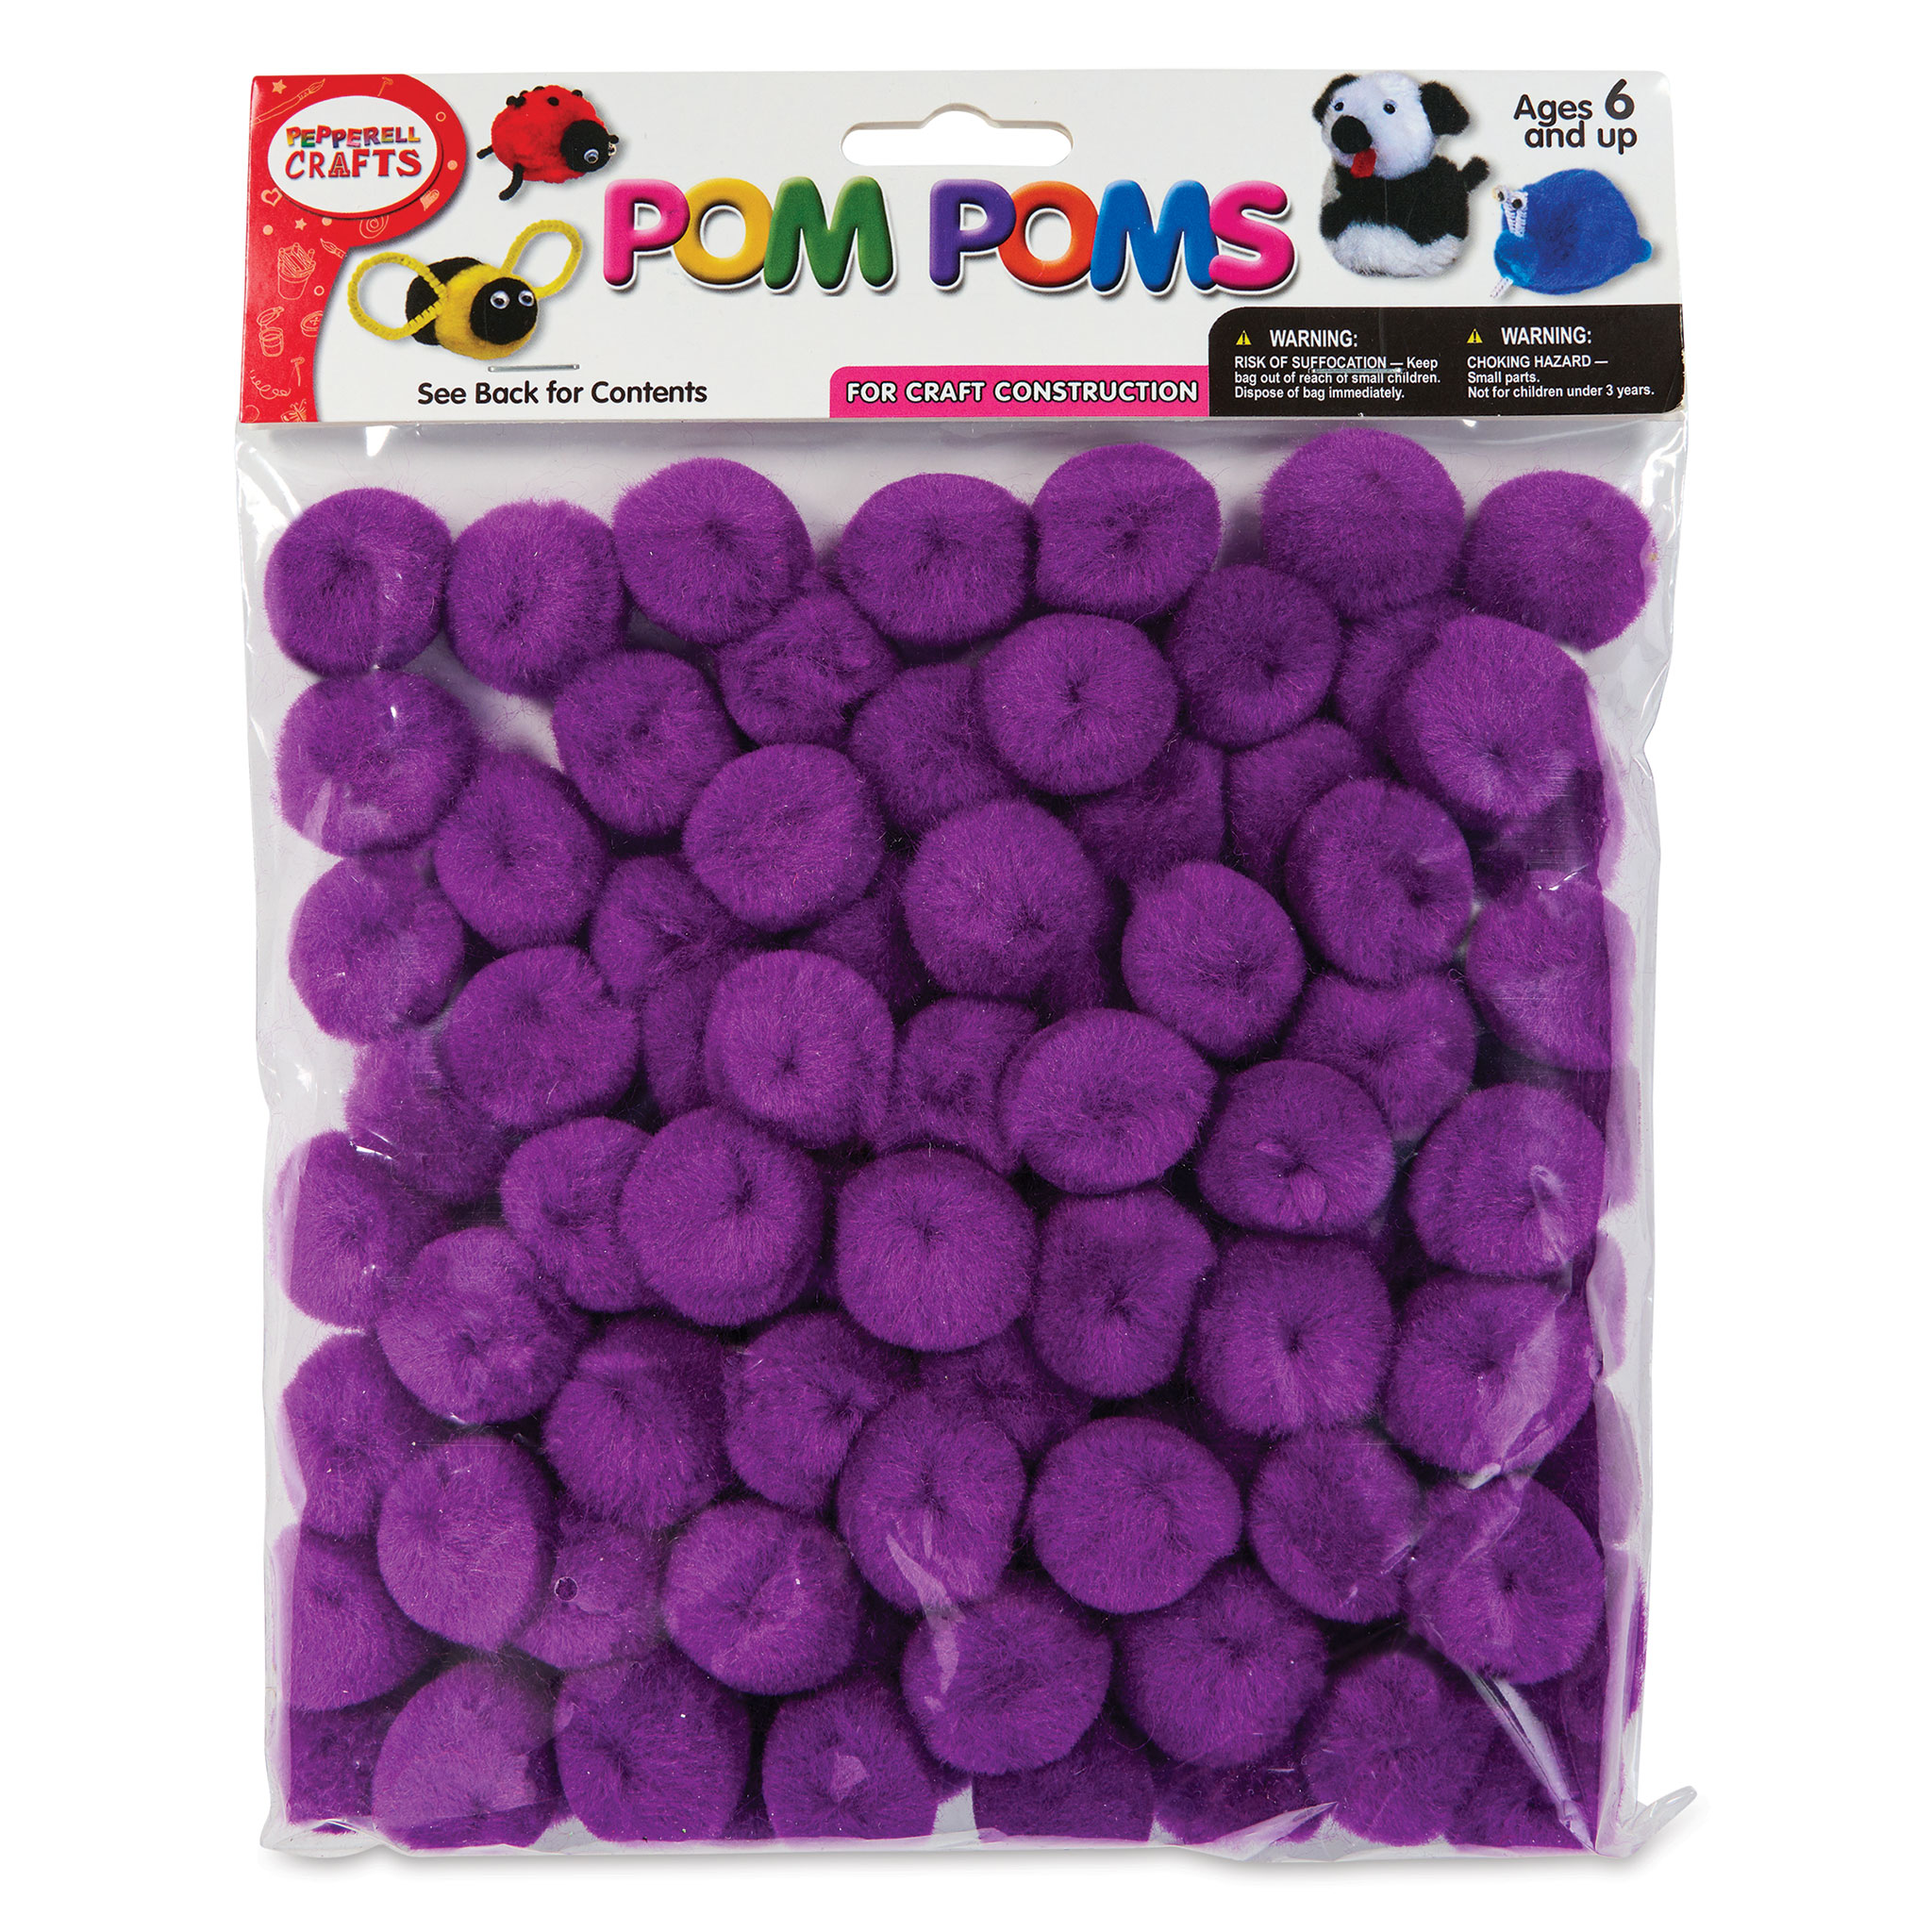 Pepperell Craft Pom Poms - Pkg of 100, 1/2, White